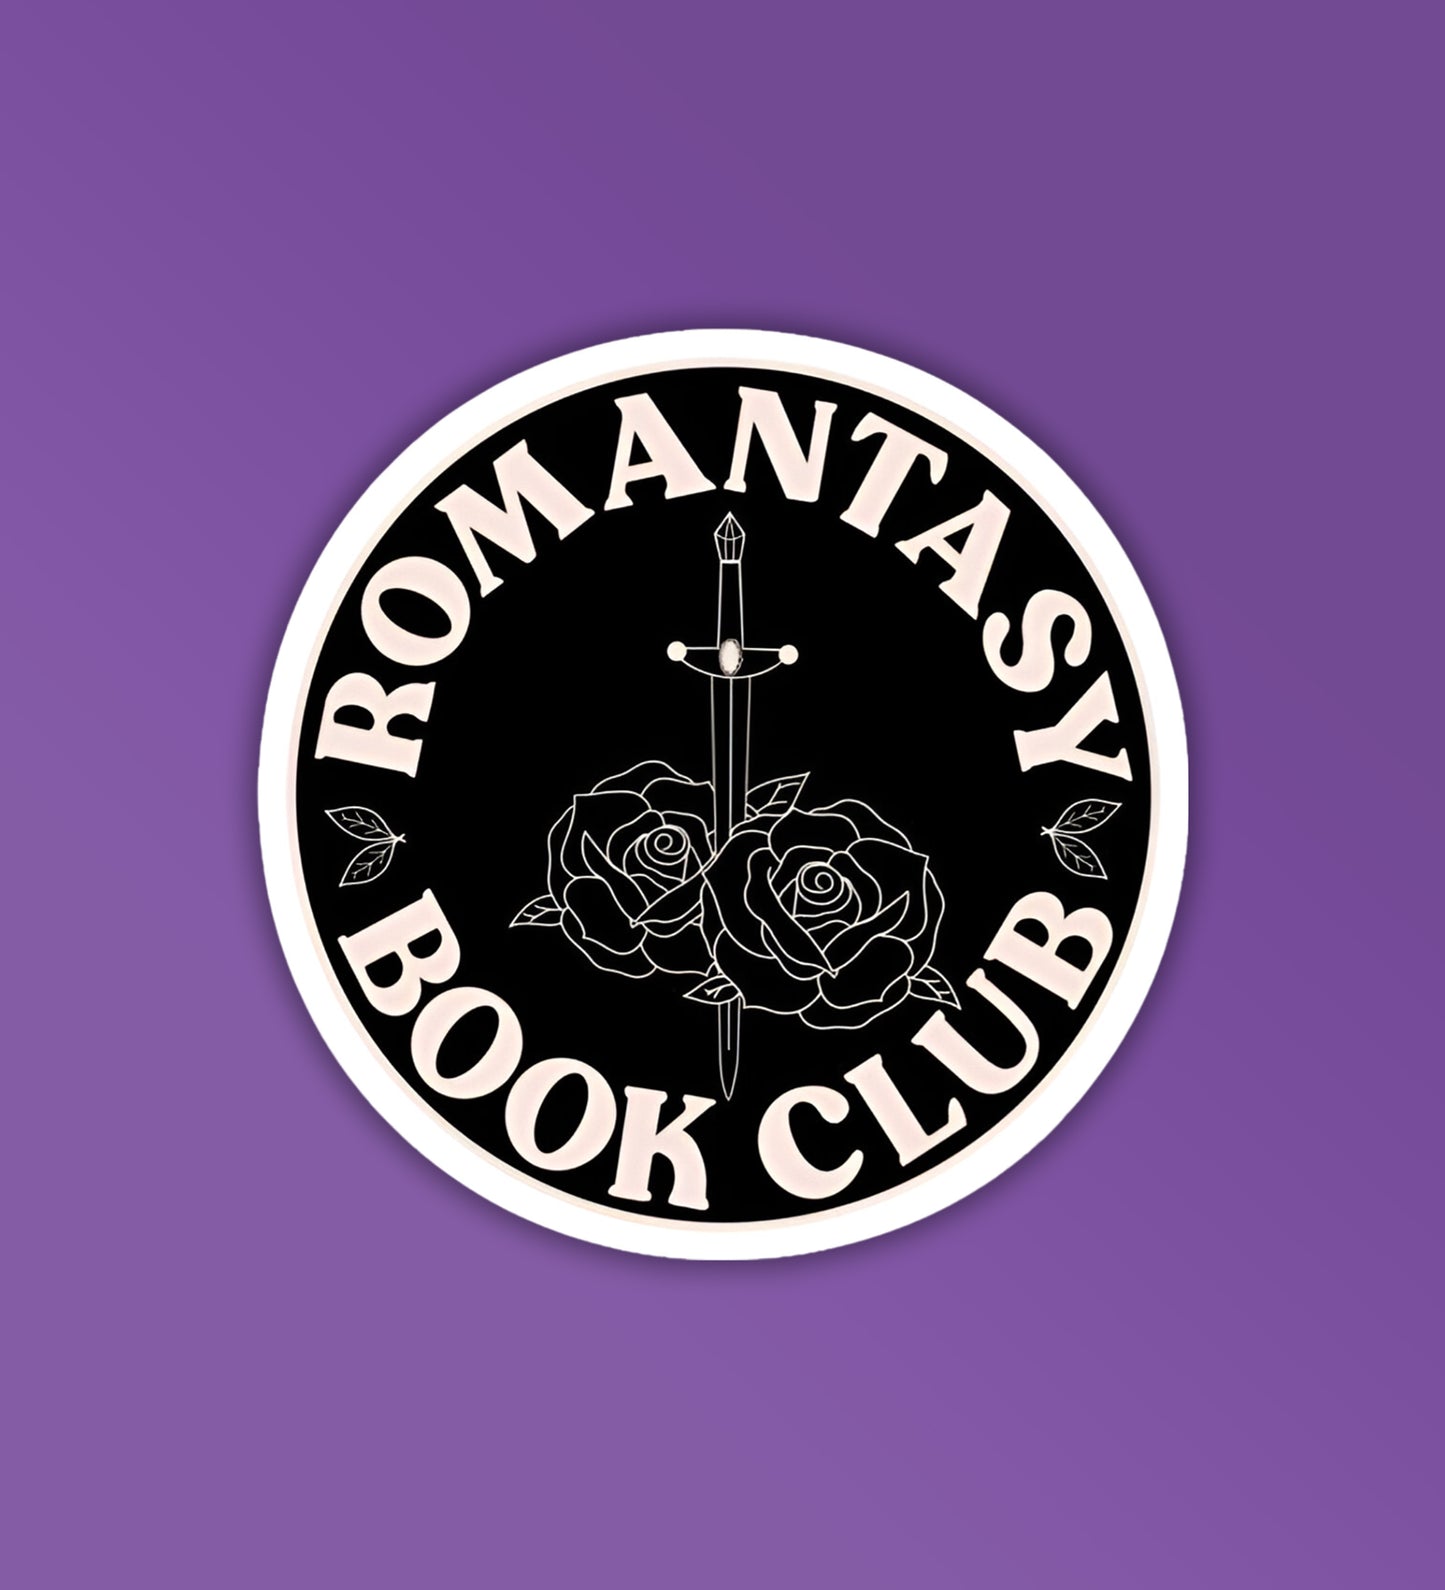 Romantasy Book Club - Laptop & Mobile Stickers